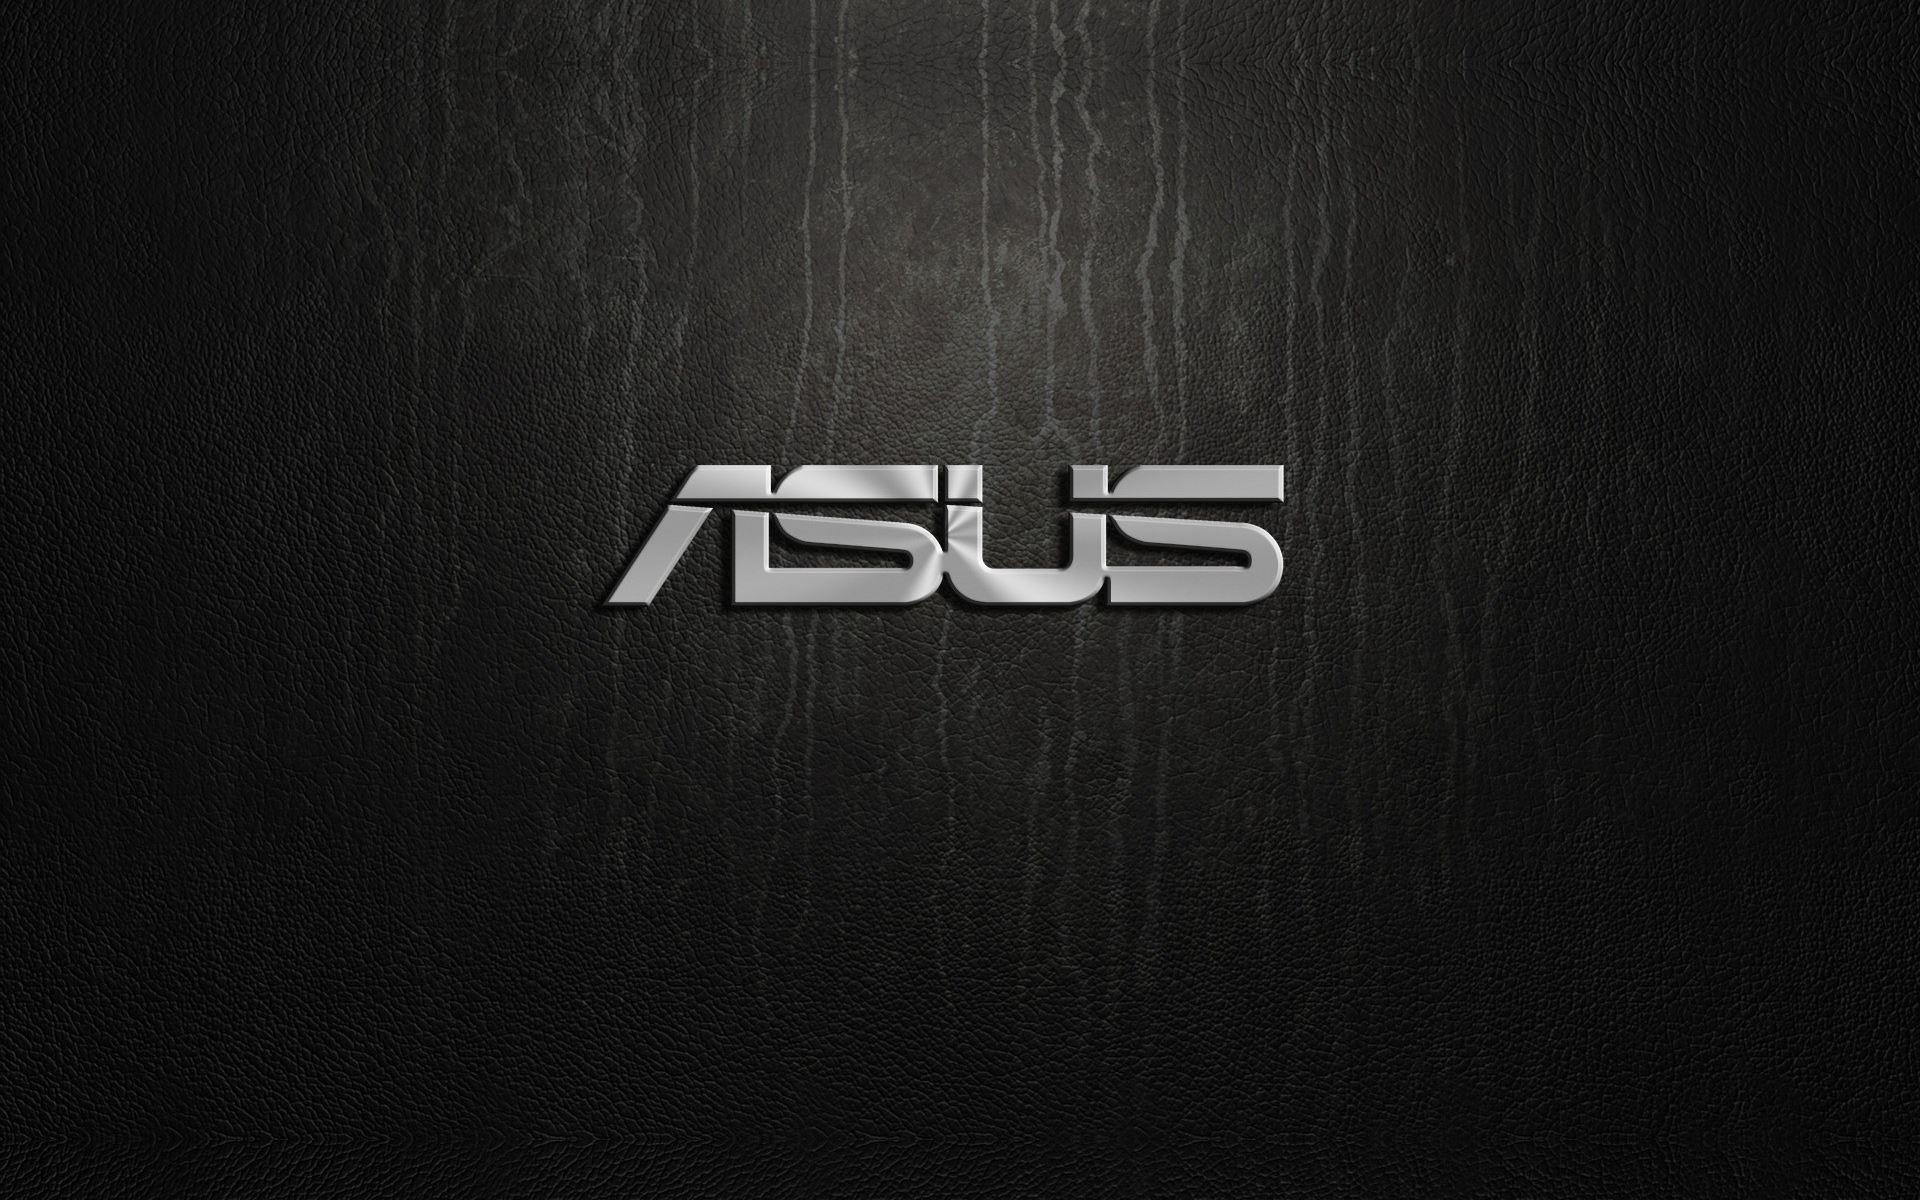 Asus silver logo on black background wallpaper download